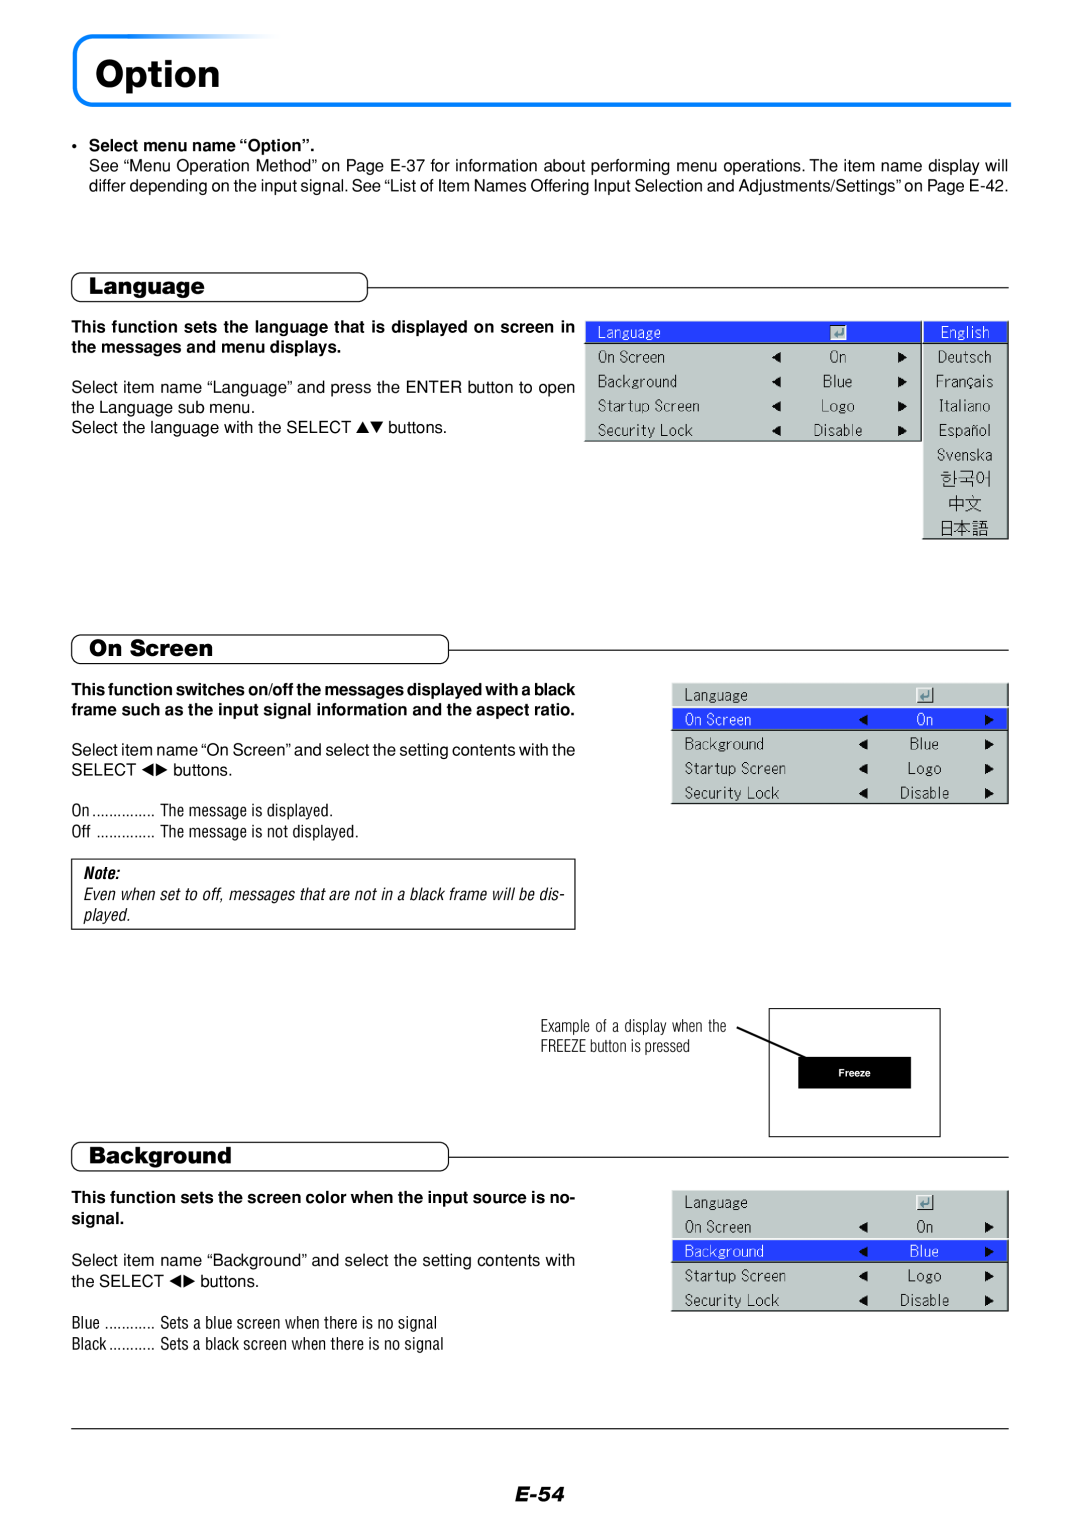 Mitsubishi Electronics DATA PROJECTOR user manual Language, On Screen, Background, E-54, Select menu name “Option” 